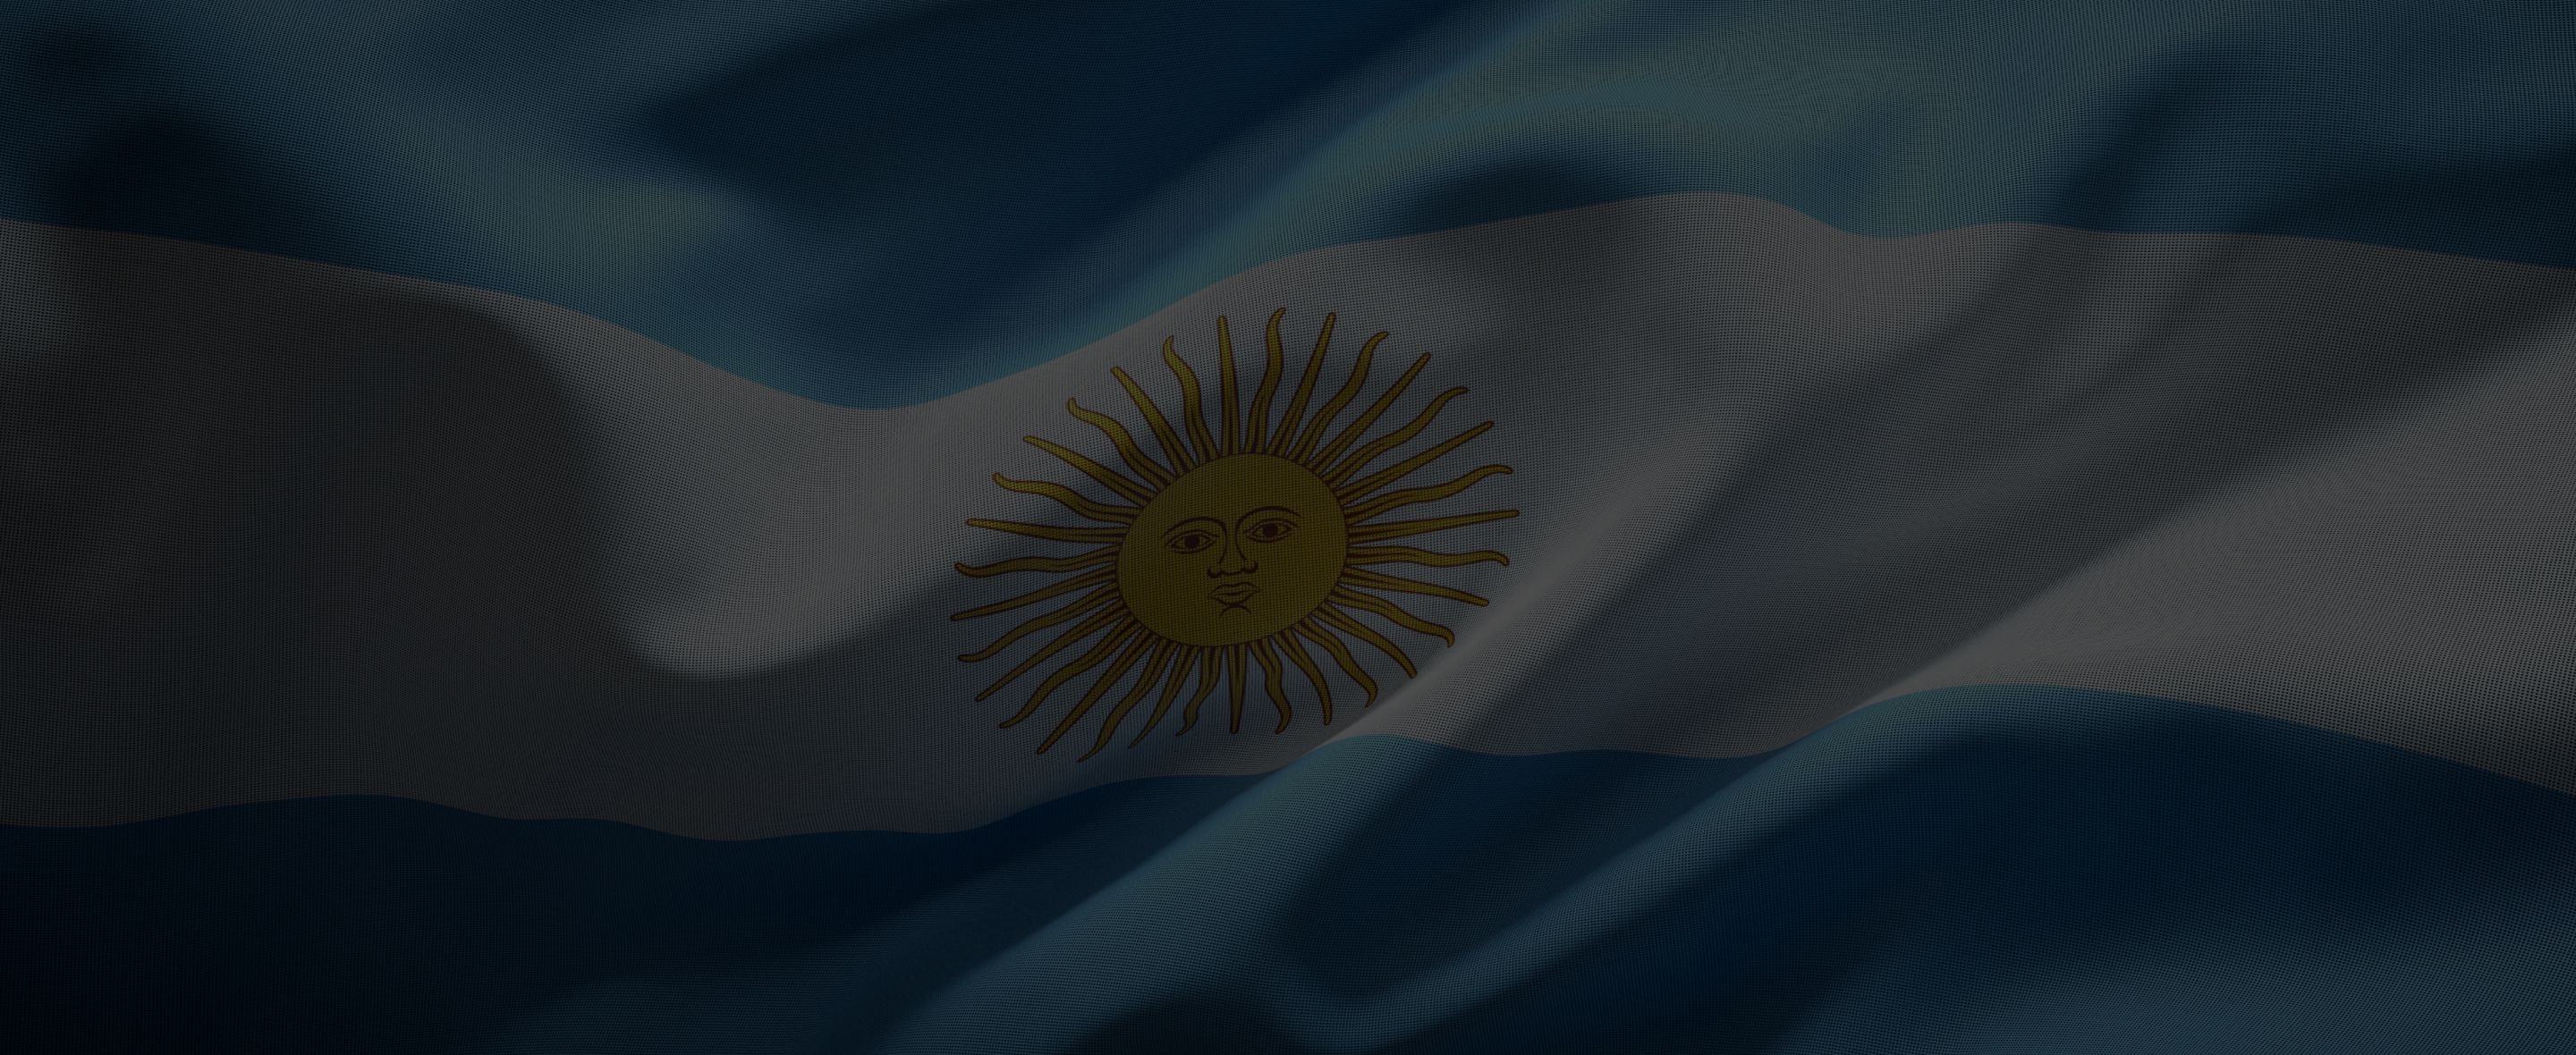 ArgentiNow, termo mate argentino